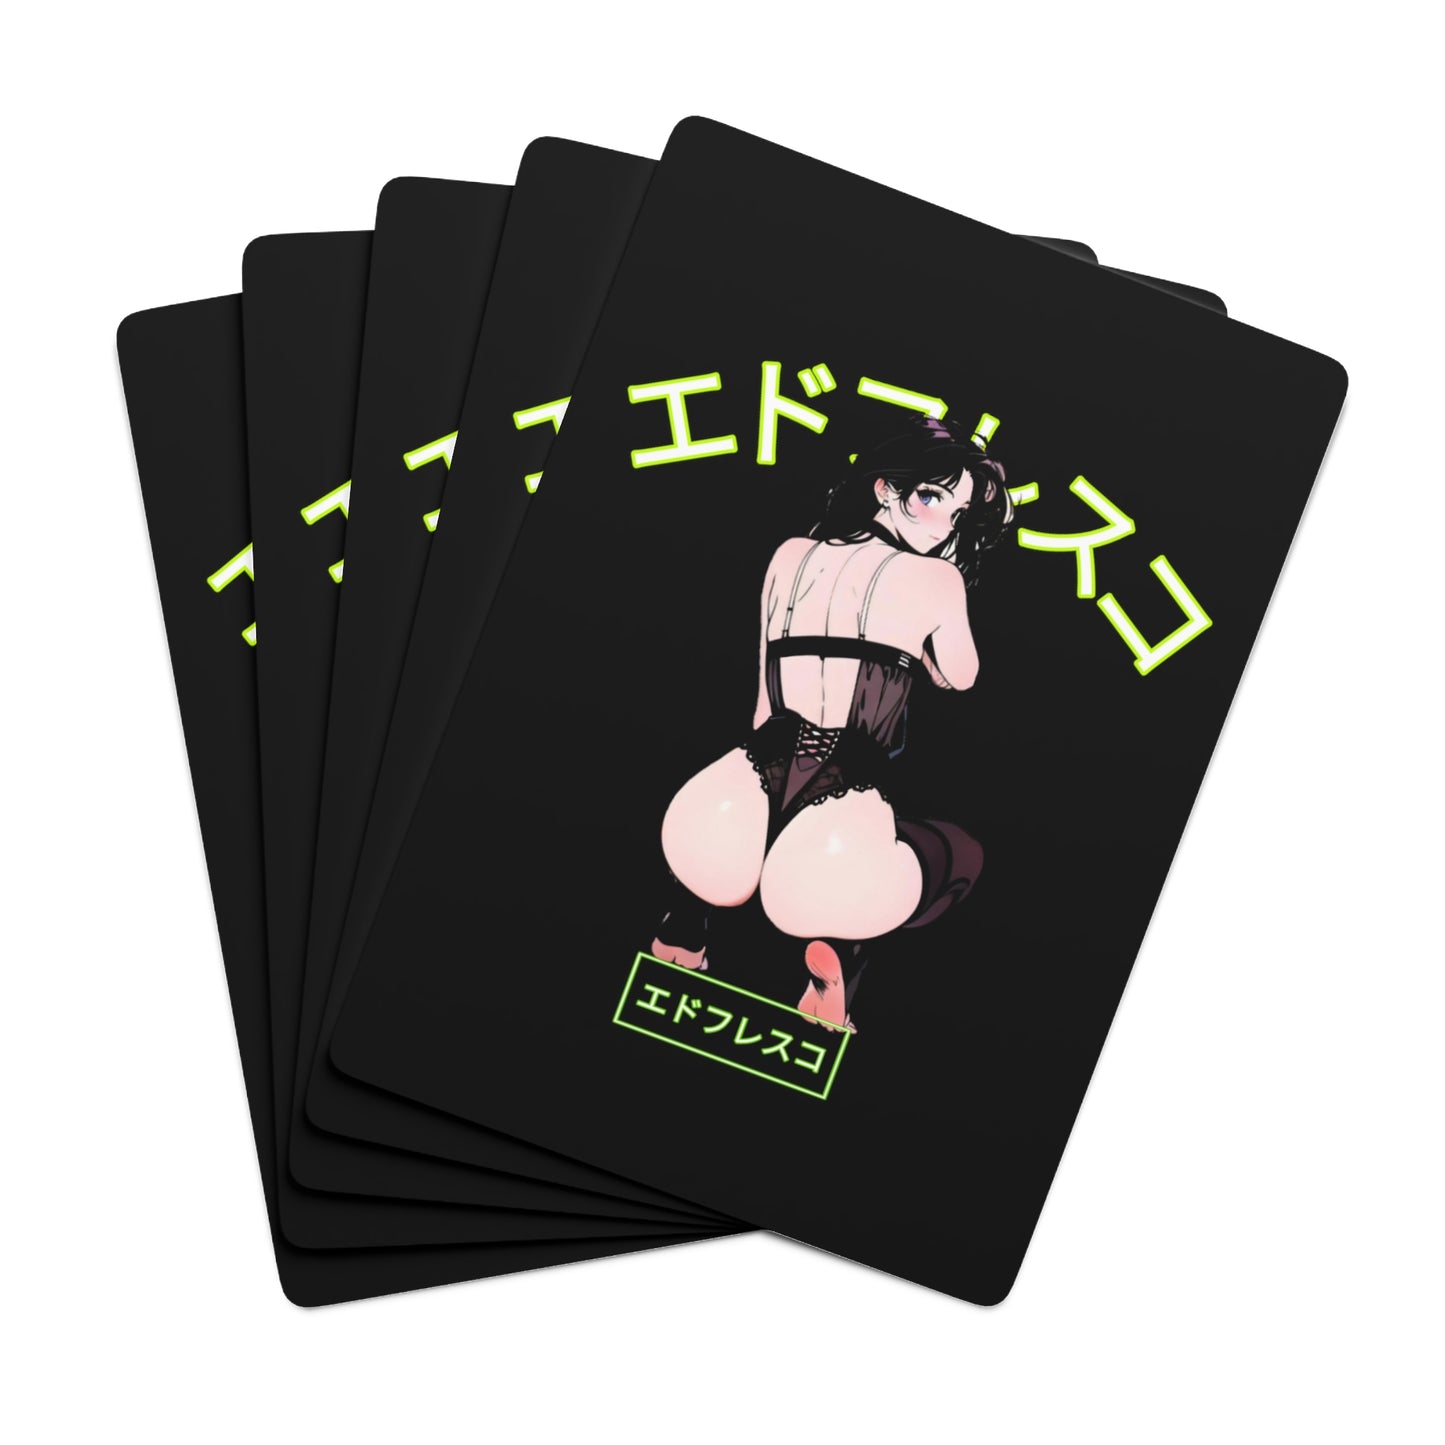 Anime Style Art Custom Poker Cards- "Made for Fun"